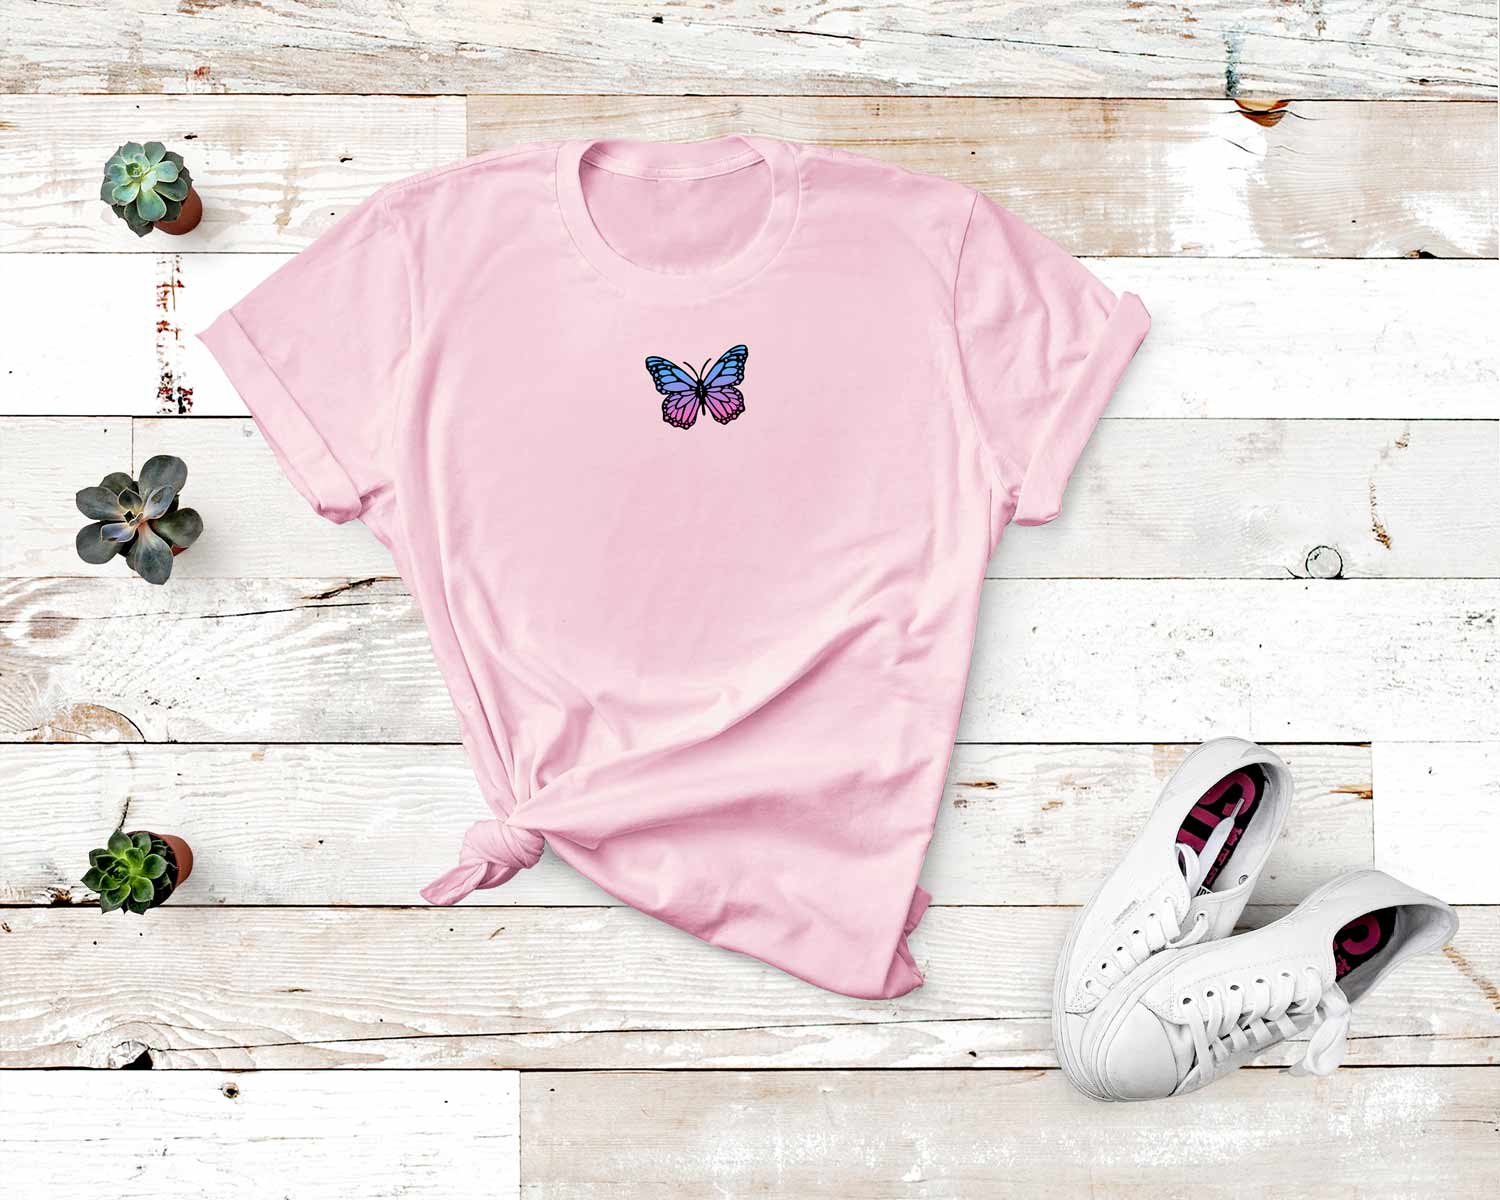 Butterfly Tee - My E ThreeT-shirt - My E Three